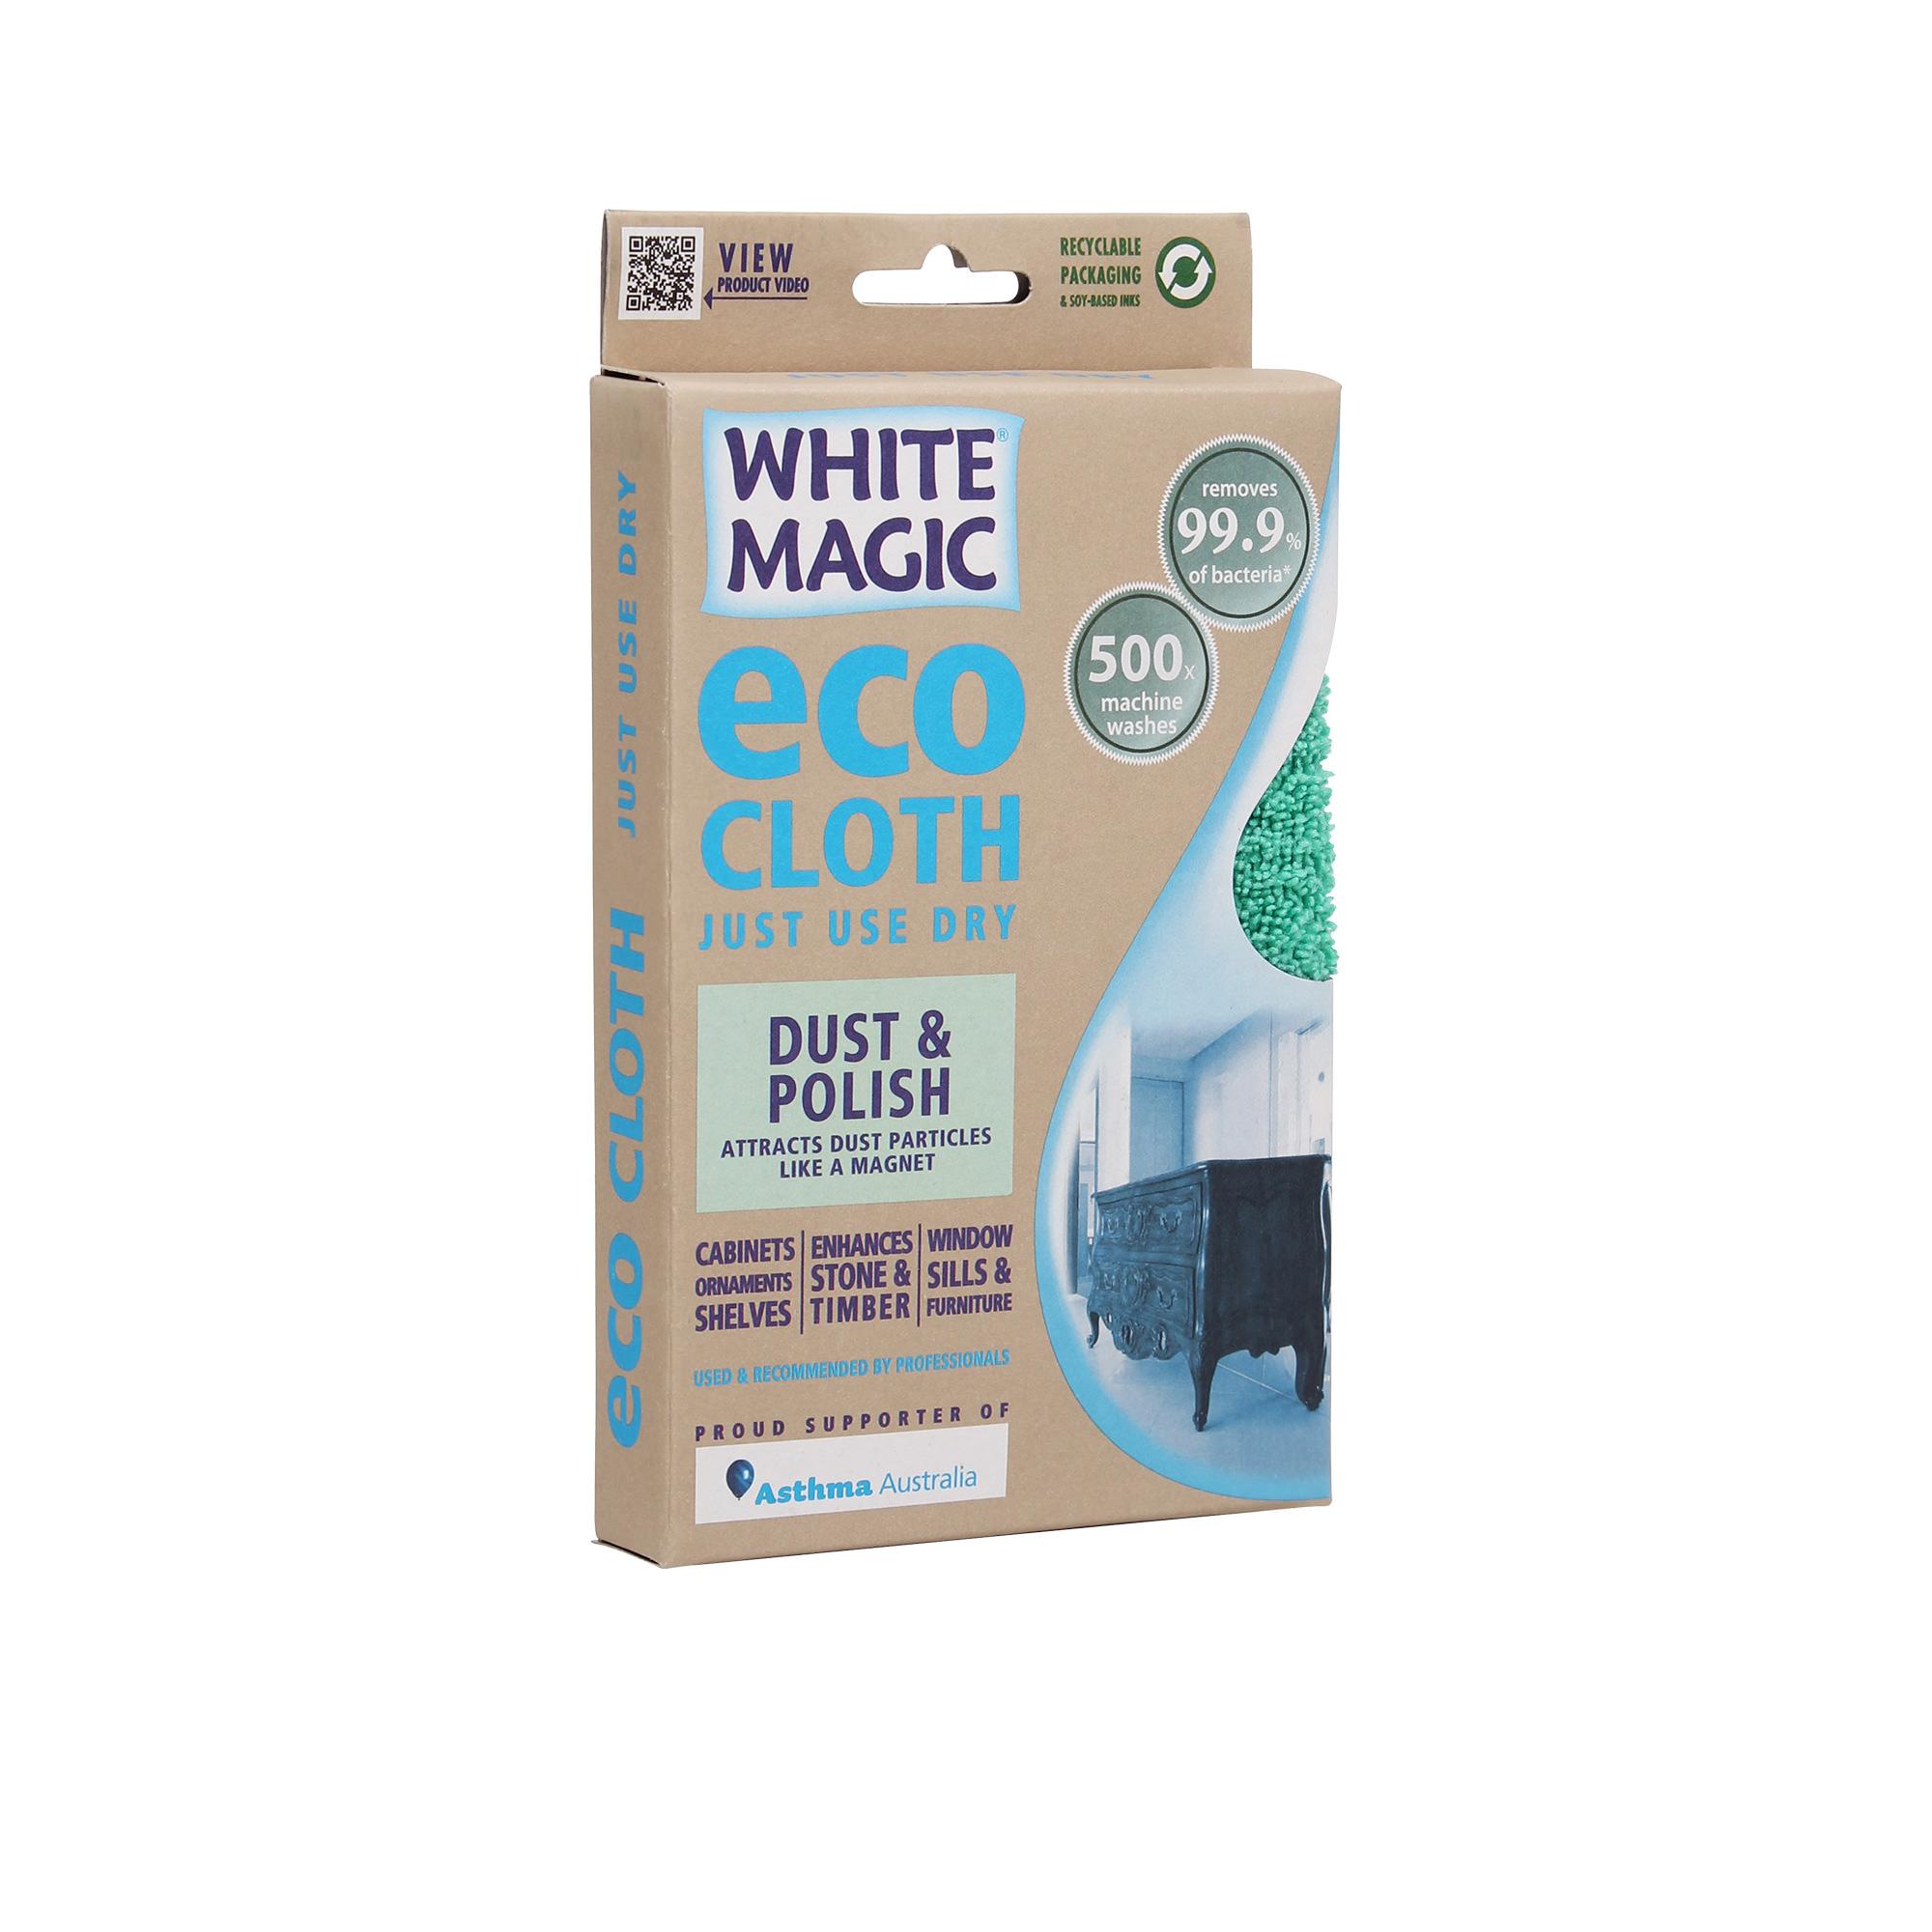 White Magic Eco Cloth Dust & Polish Image 2